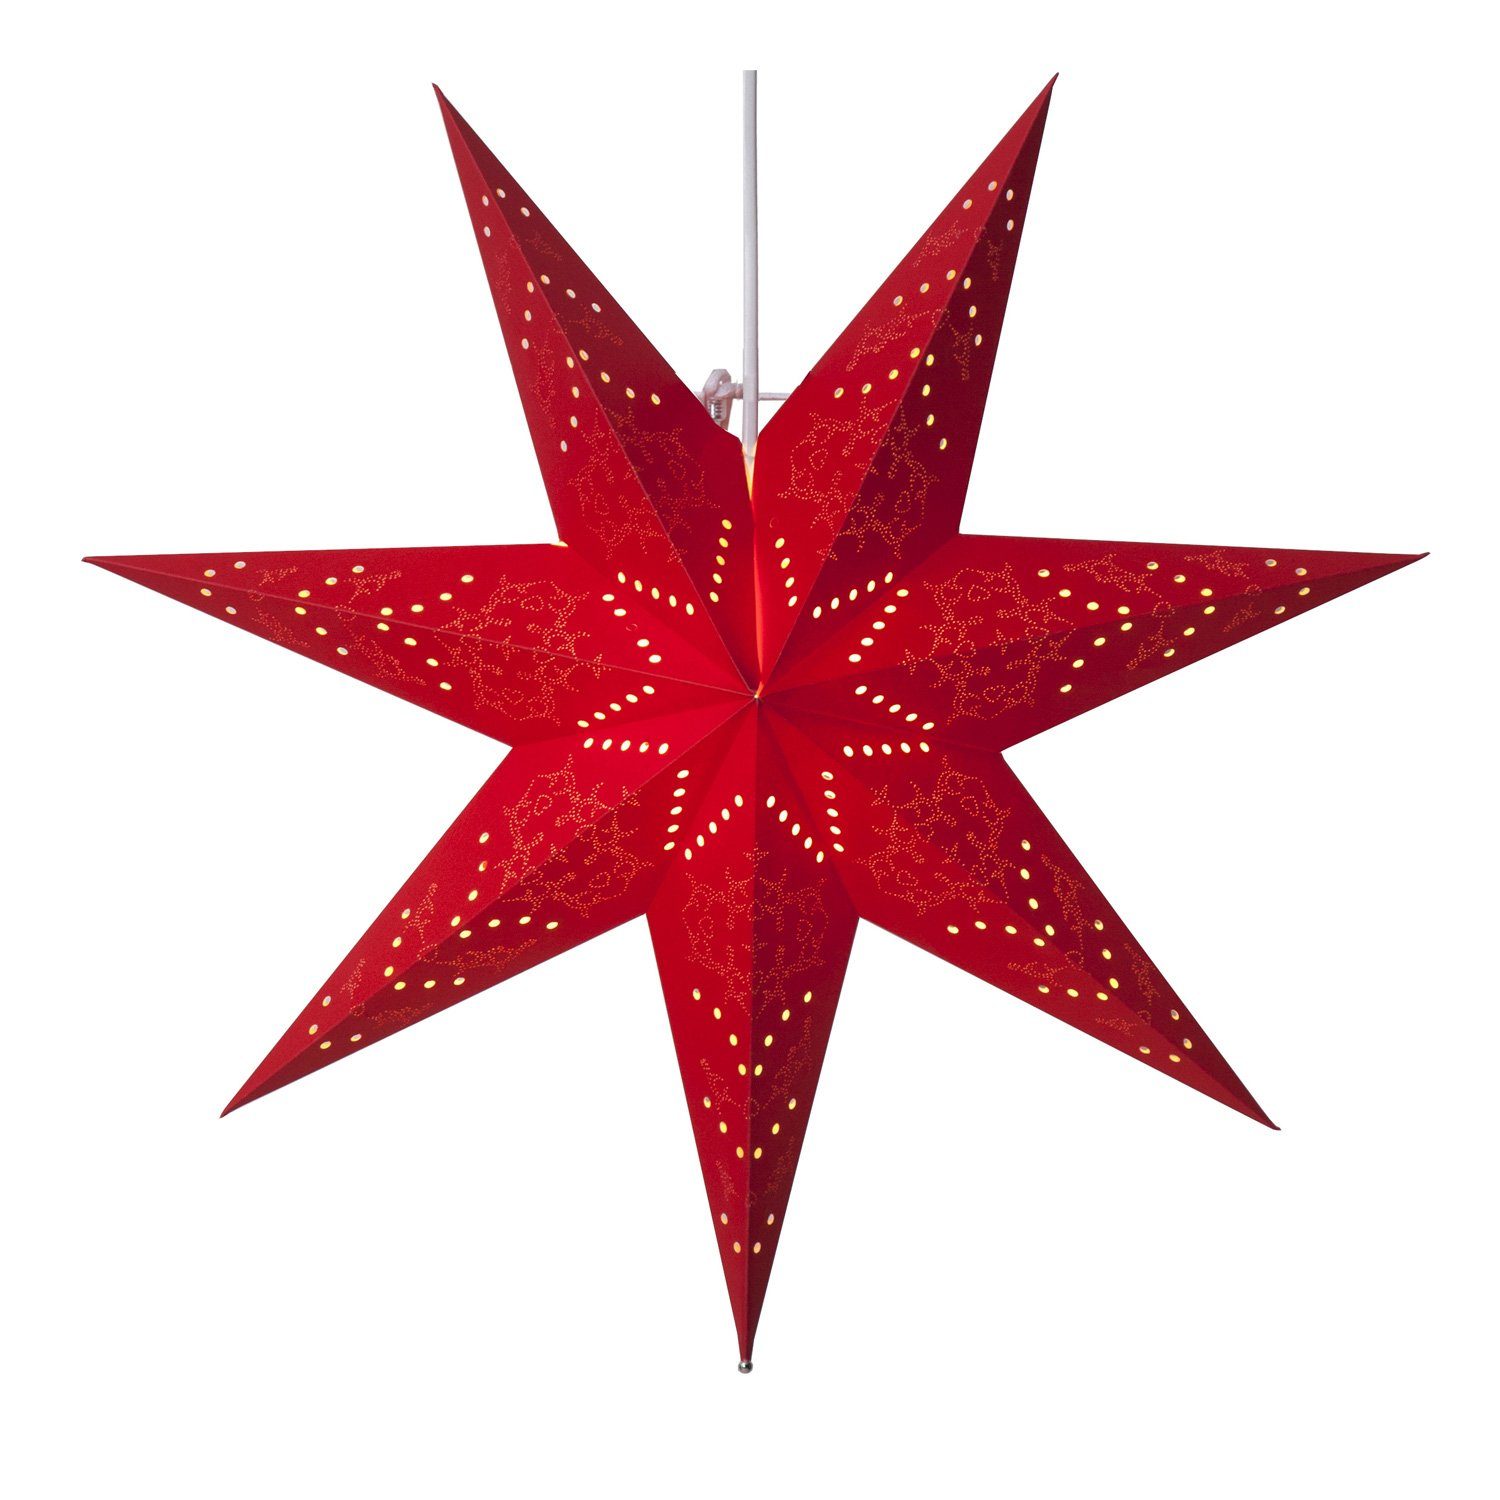 Papierstern Faltstern 7-zackig LED TRADING hängend mit Leuchtstern Kabel rot 51cm STAR Stern